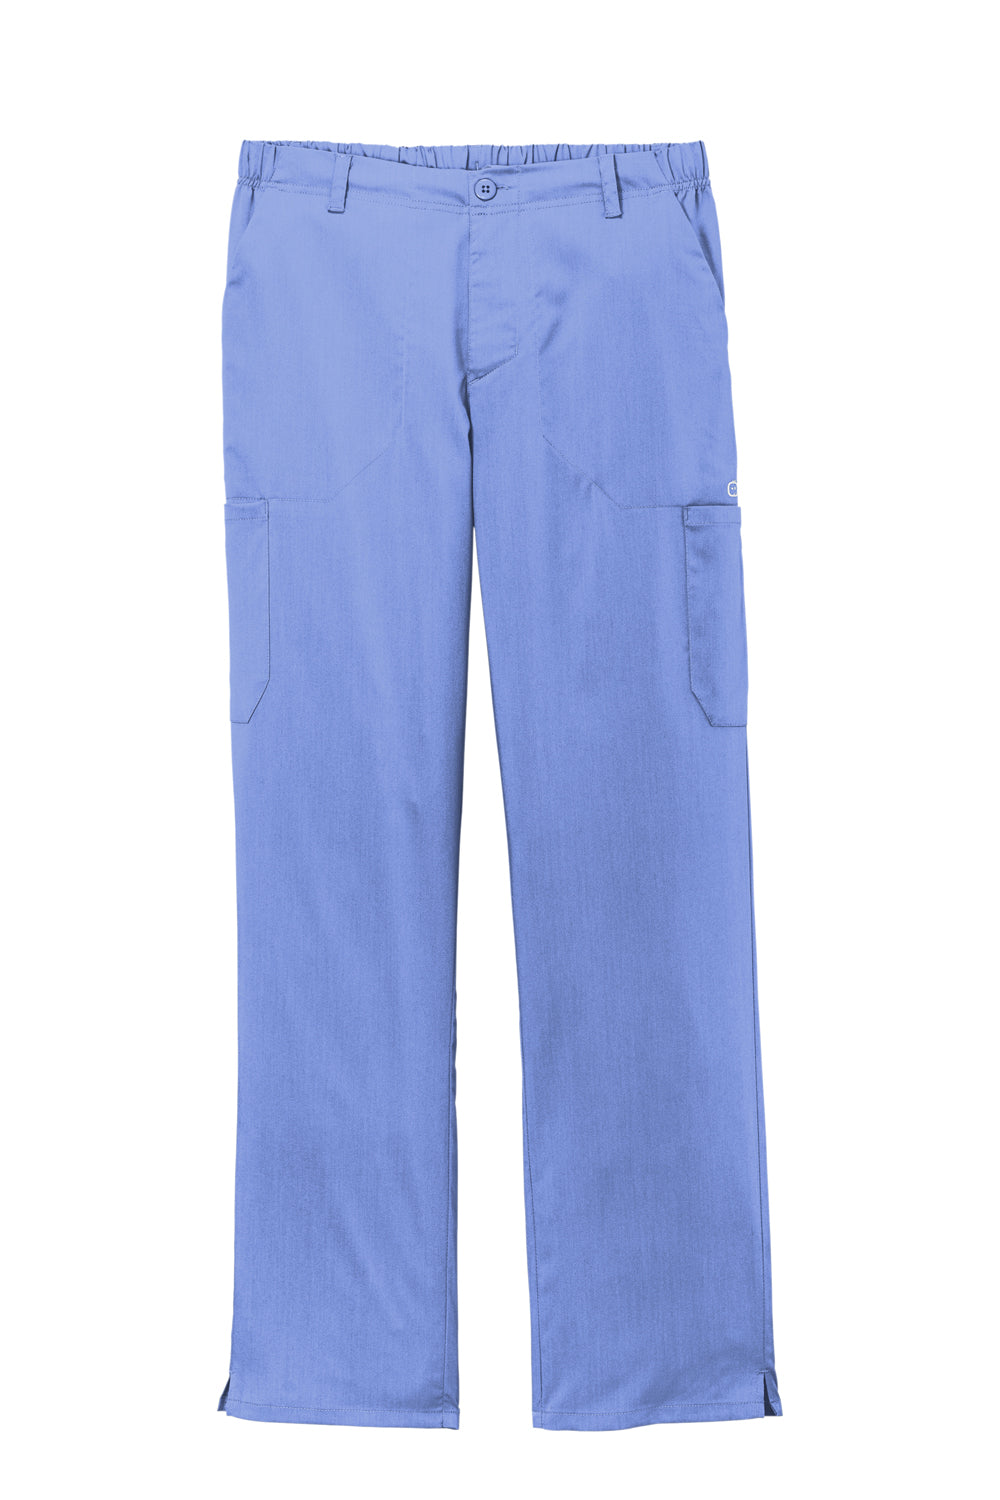 Wonderwink WW5058 Premiere Flex Cargo Pants Ceil Blue Flat Front